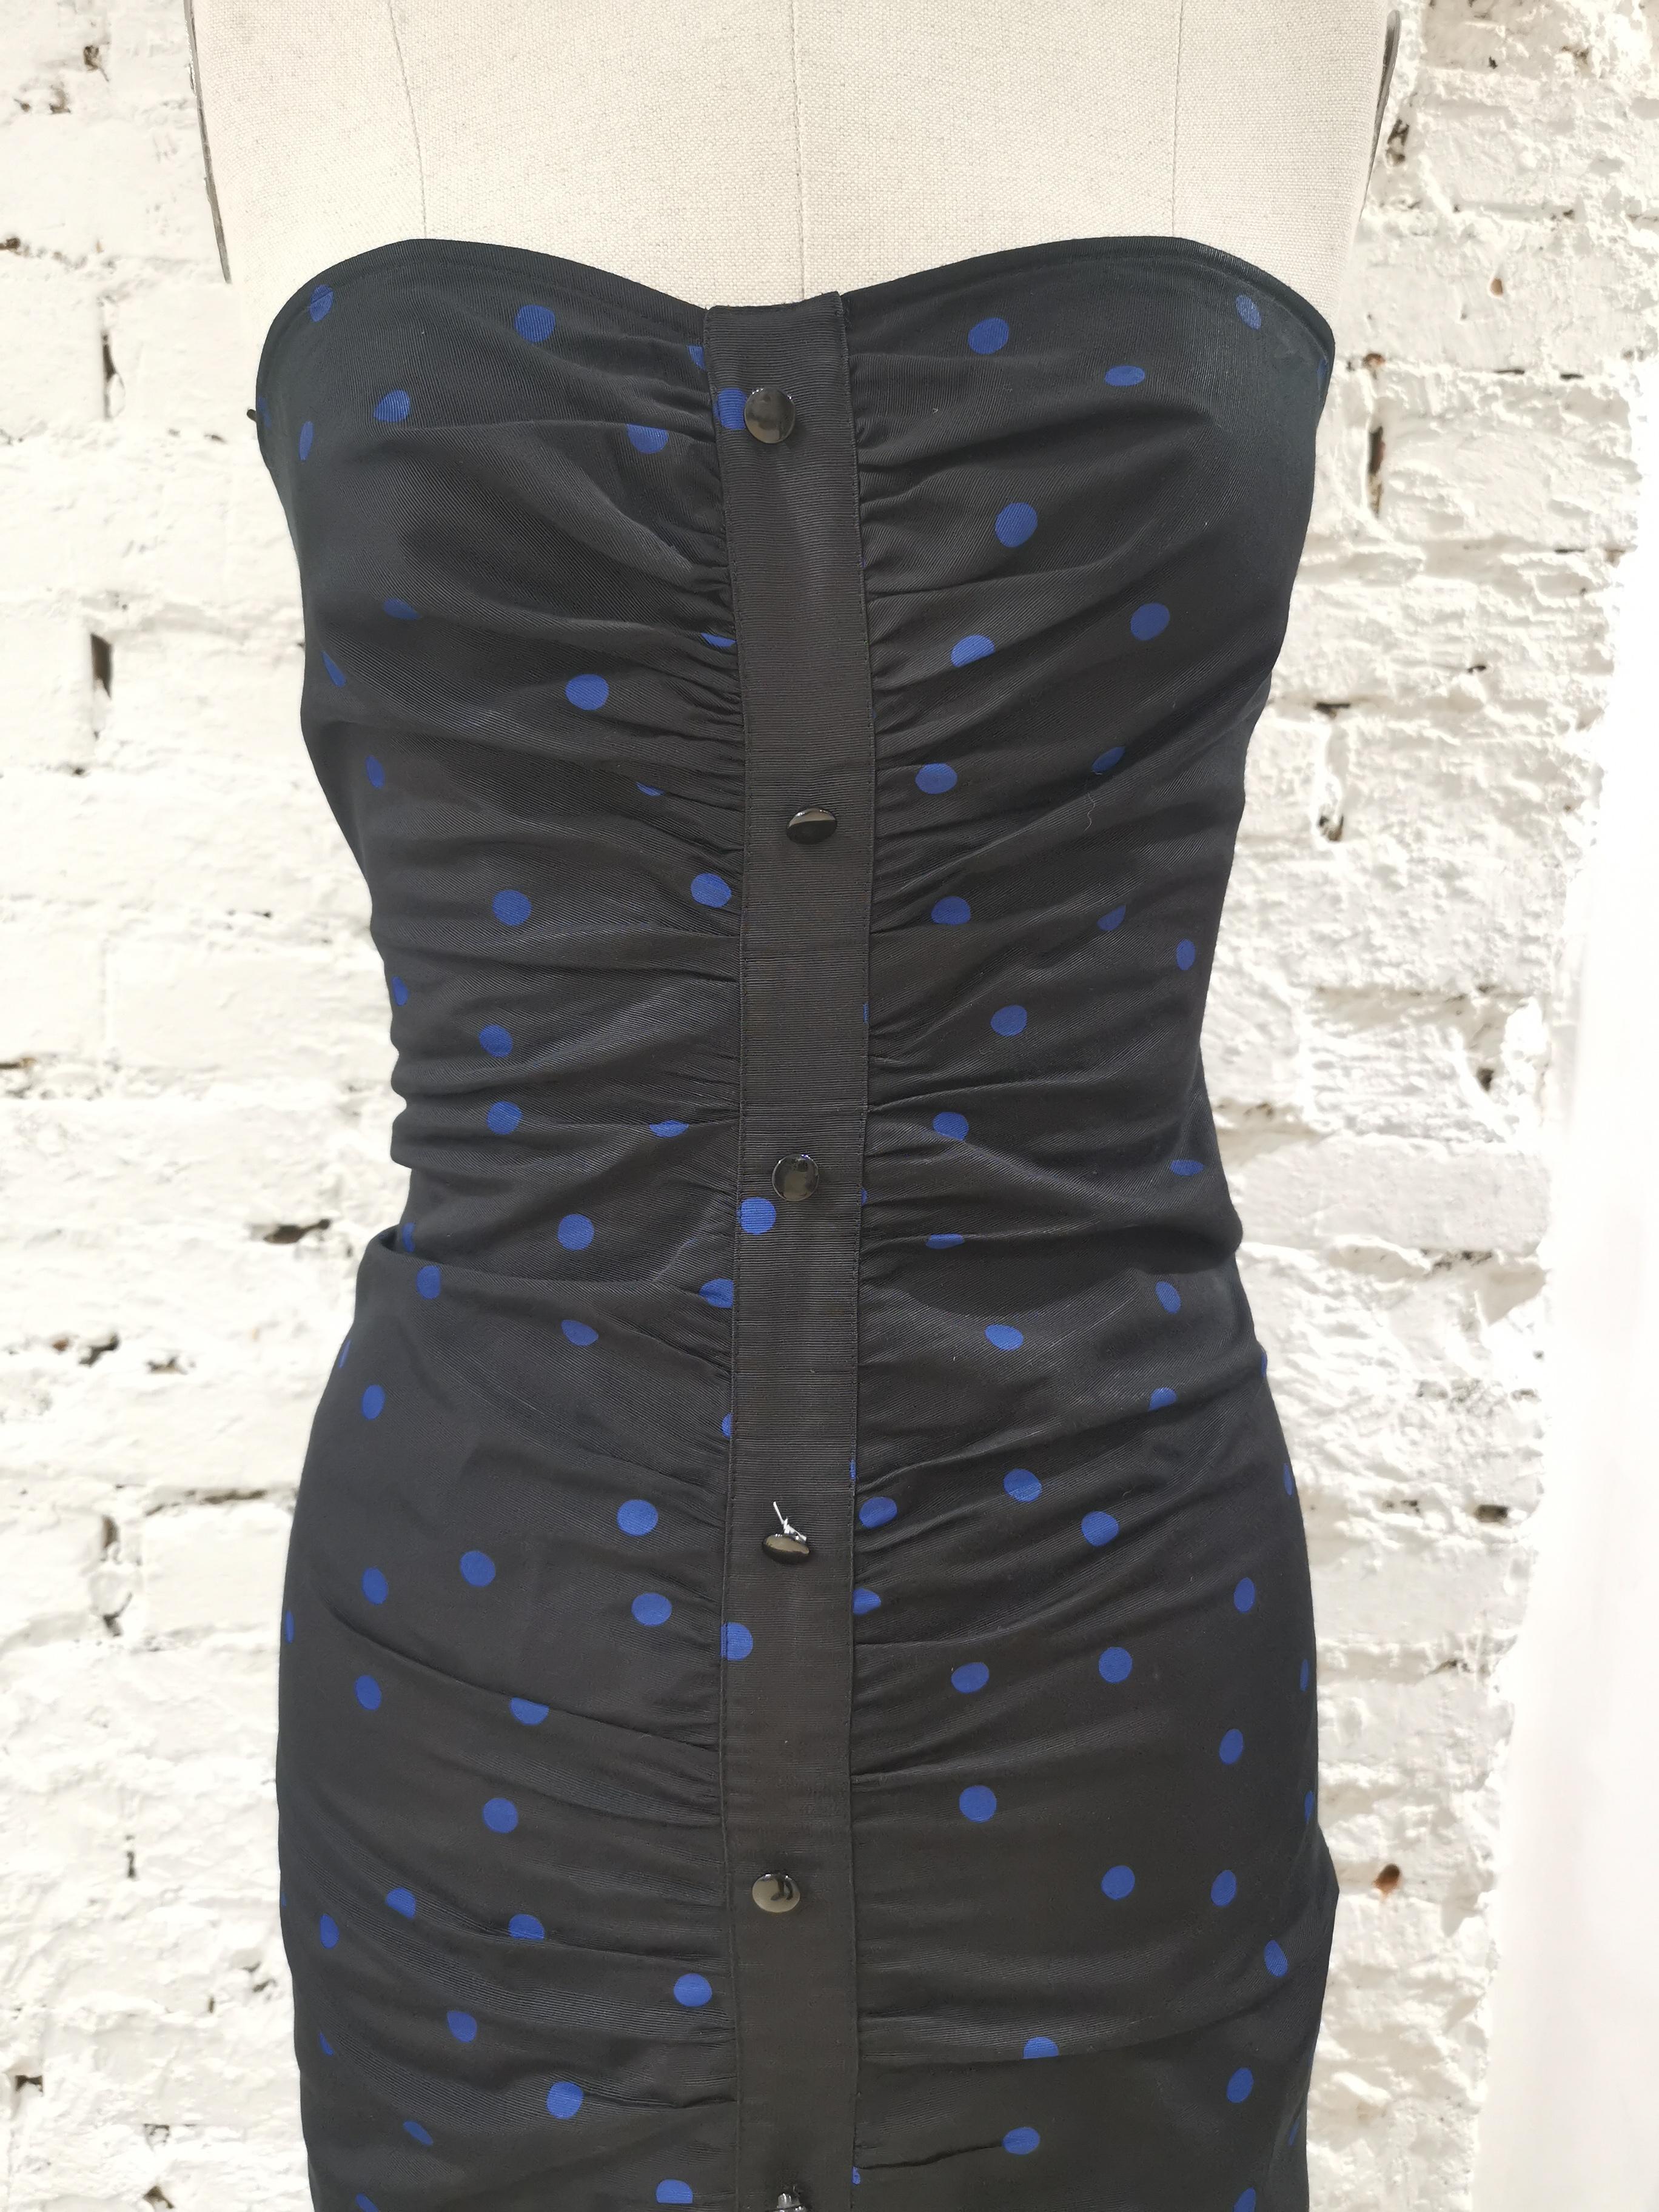 Vintage Bibi la Luna black blue pois dress
size M